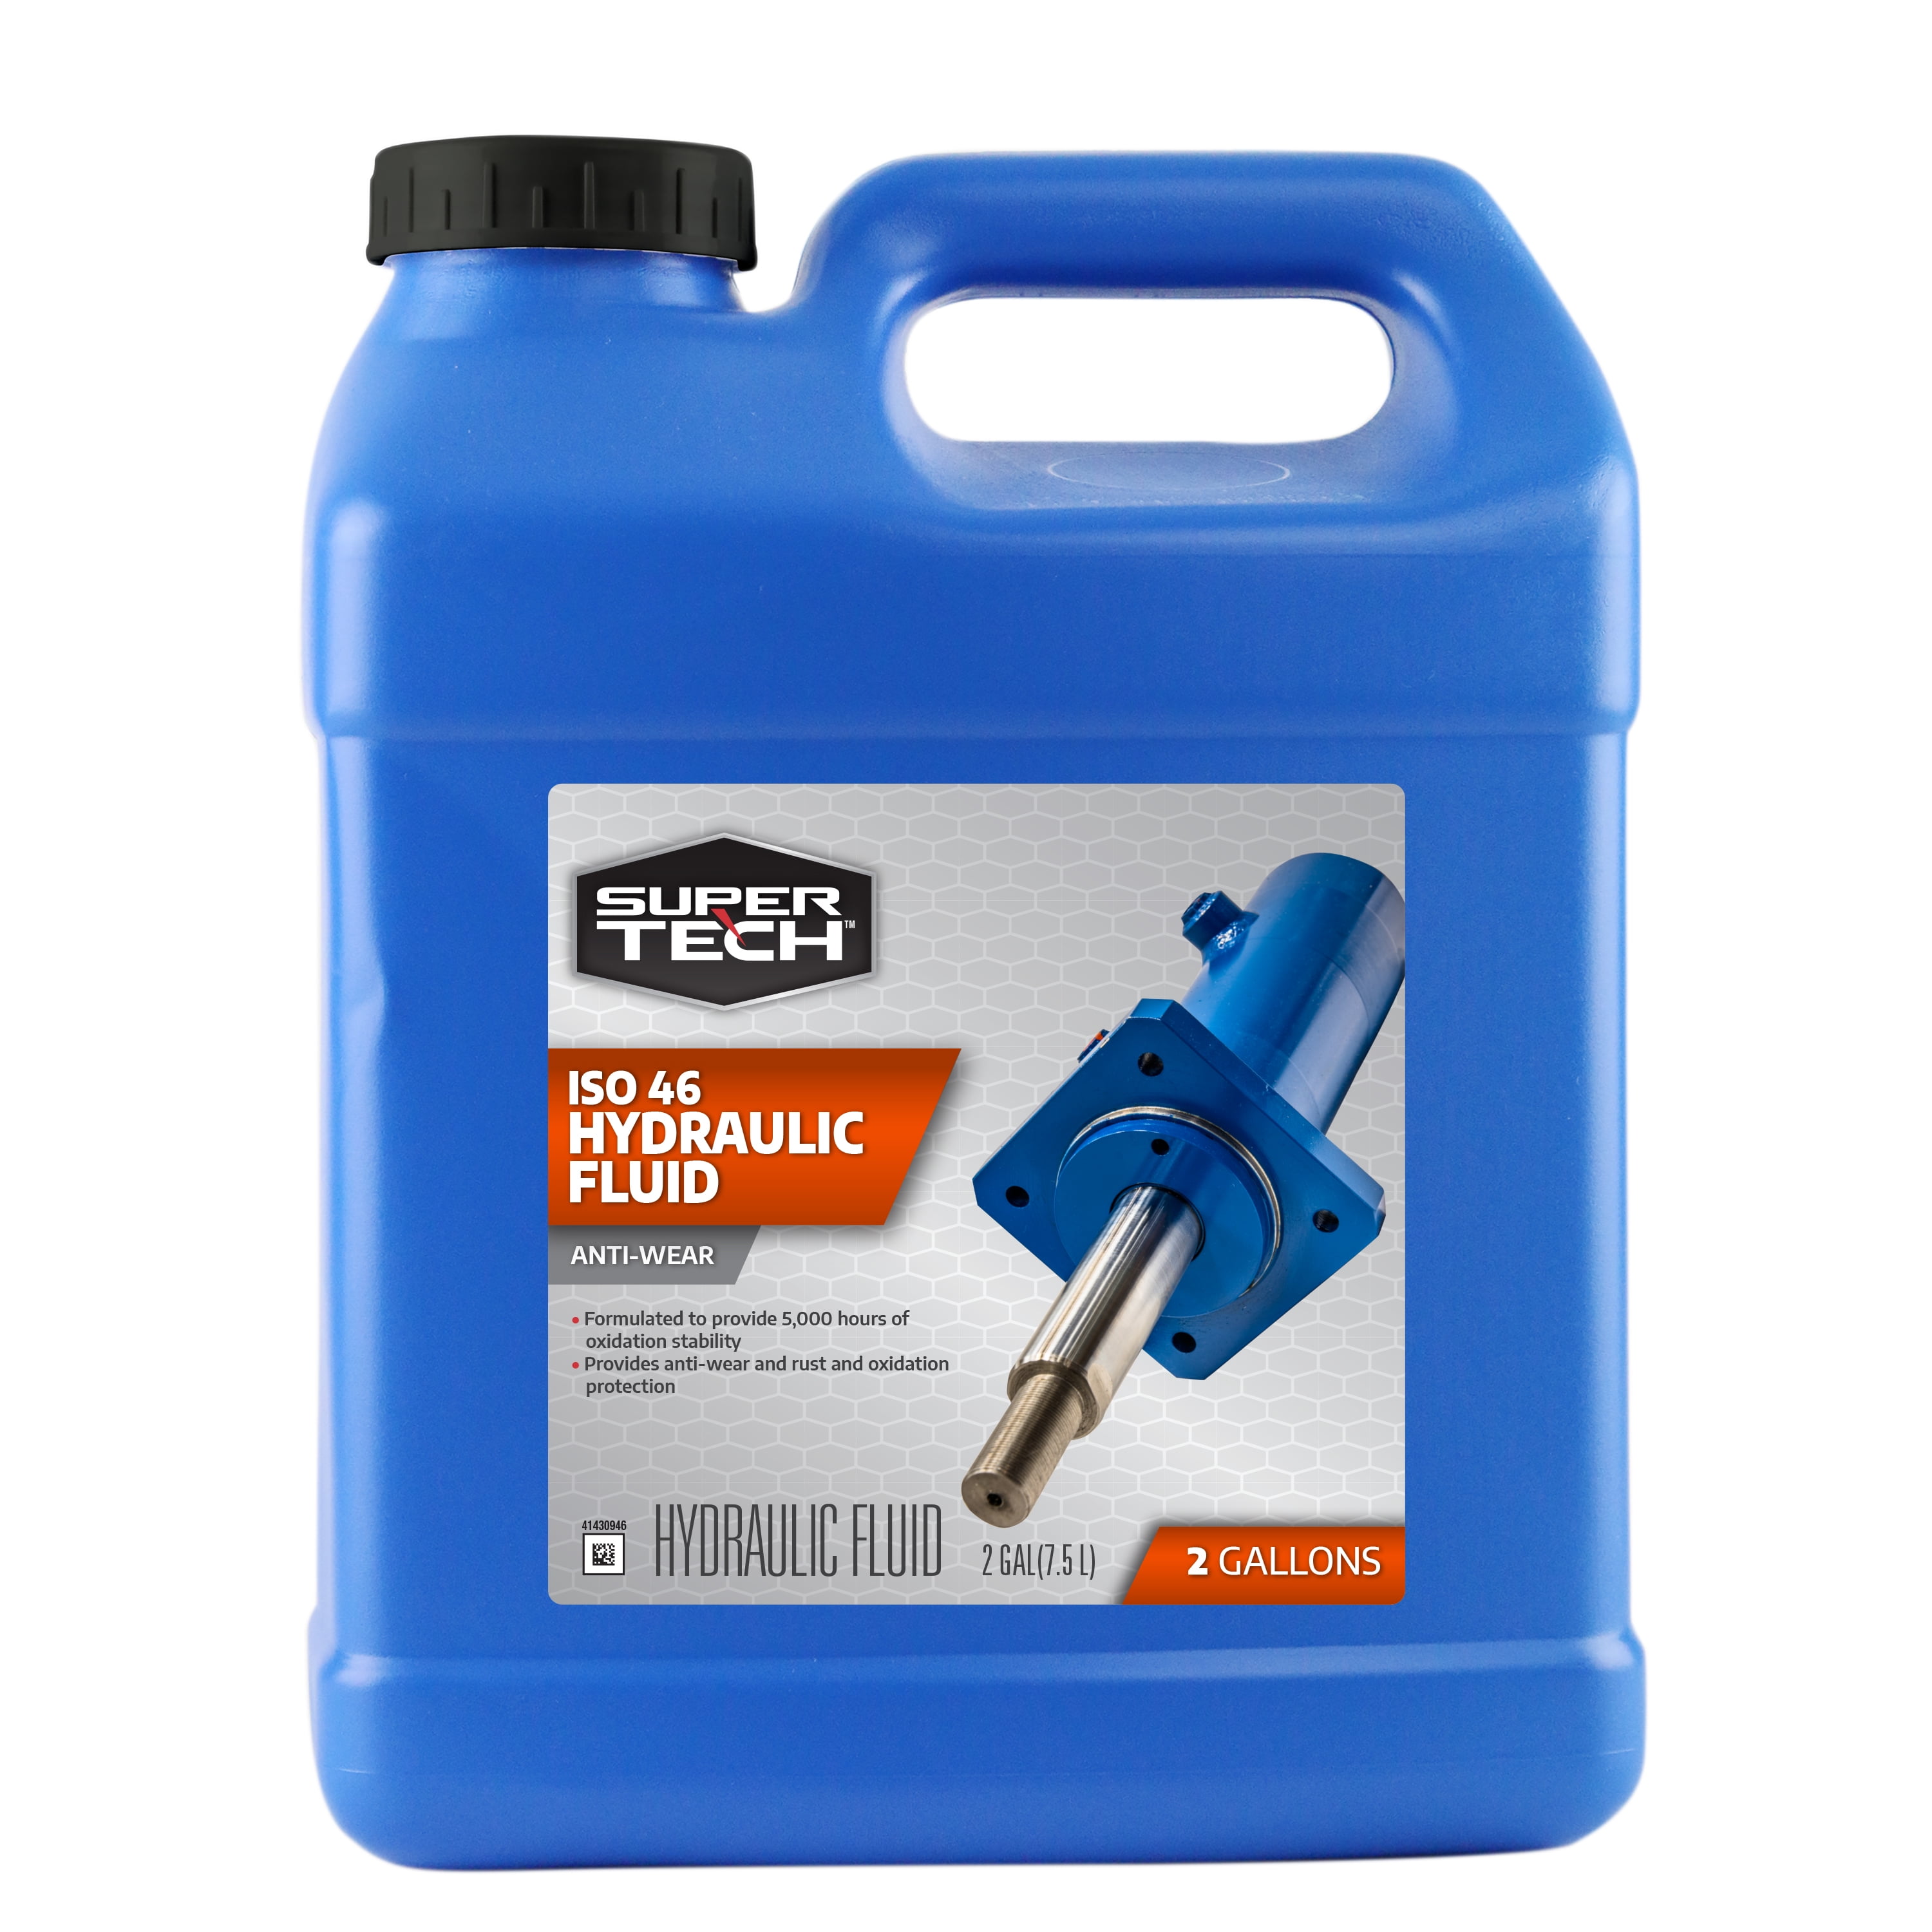 Super Tech Heavy Duty Rust and Oxidation Anti Wear Hydraulic Oil, 2 Gallons